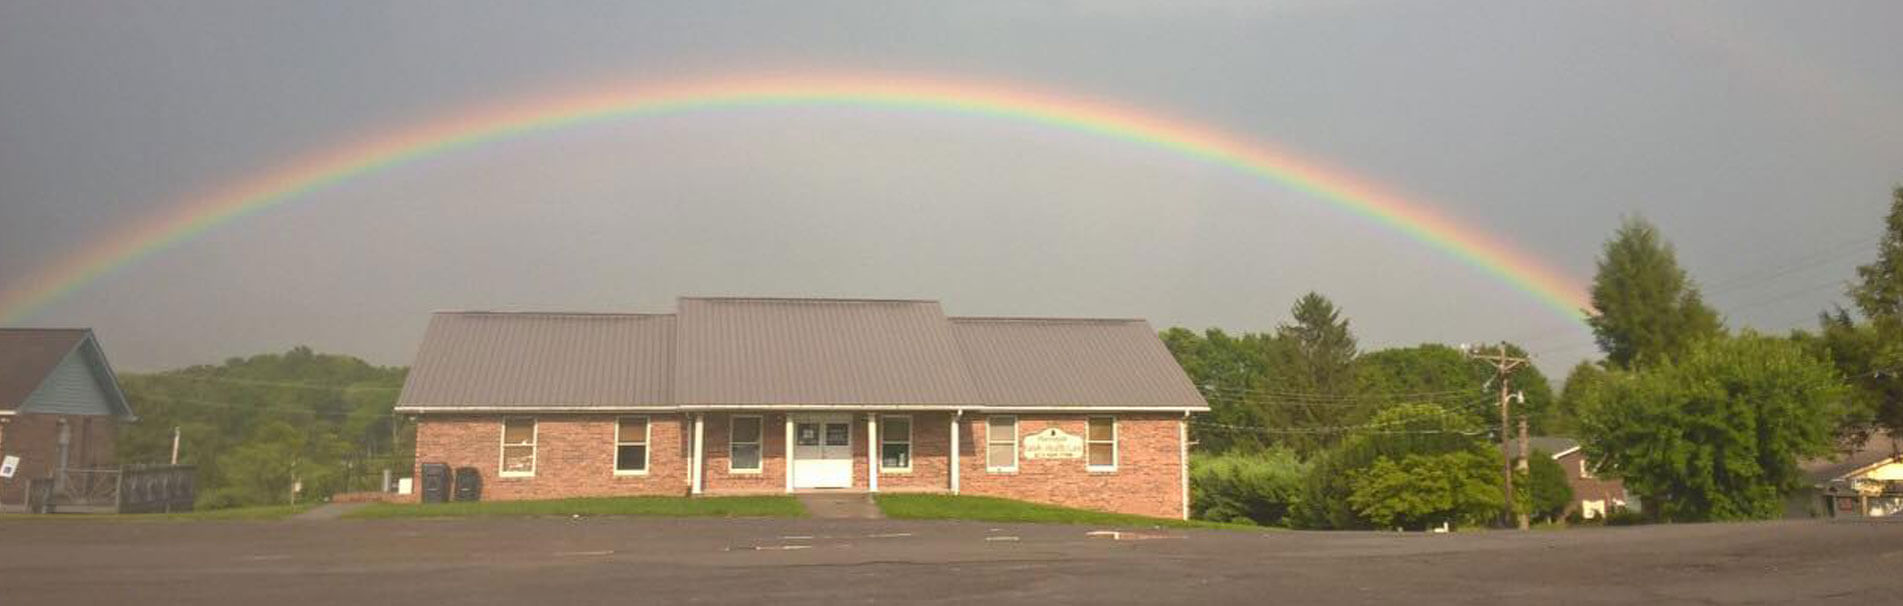 Rainbow over the building at Claiborne Health & Wellness in Harrogate, TN